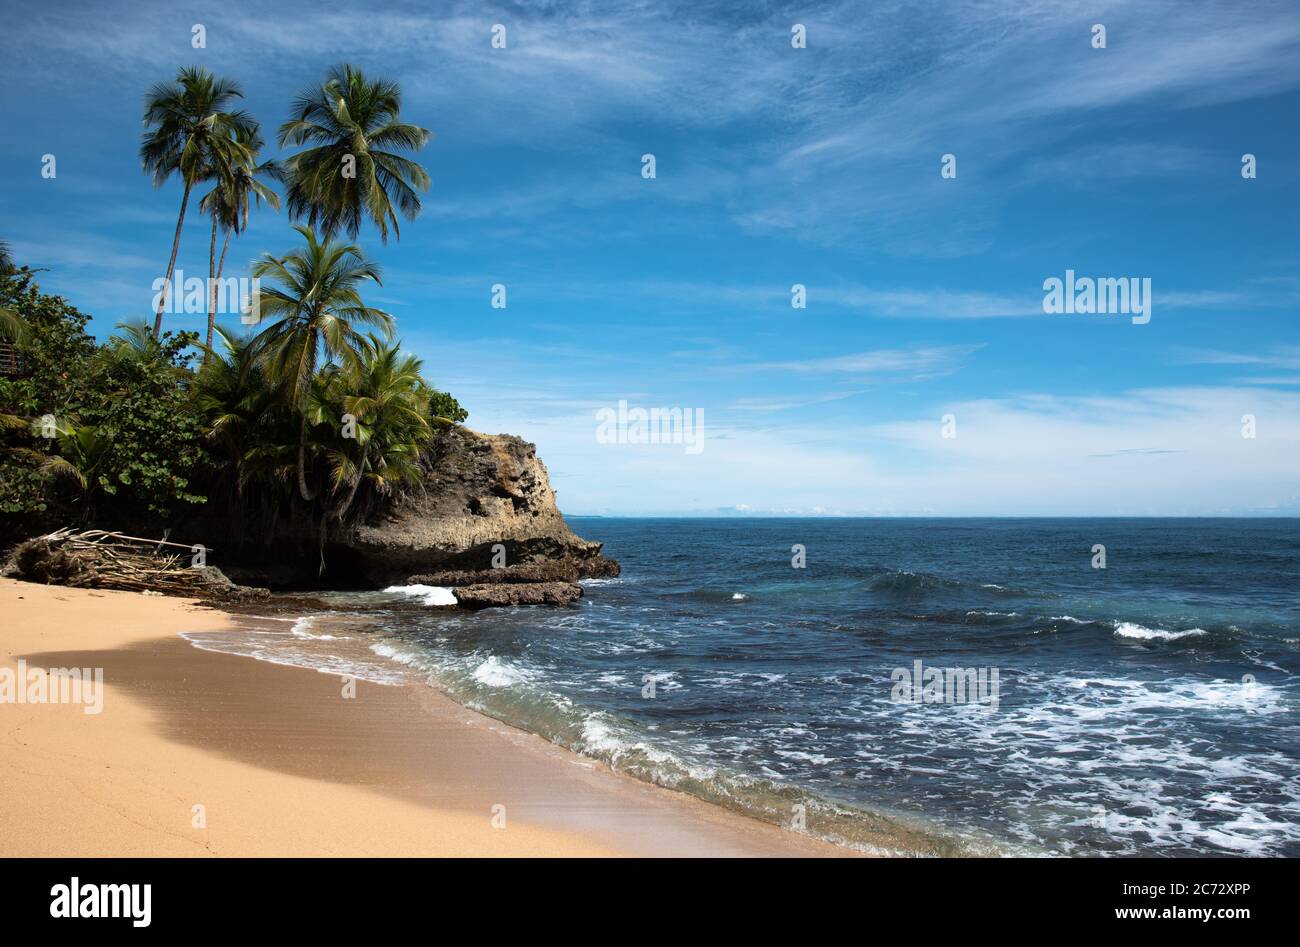 Wild caribbean beach, raw jungle Rainforest beach, Manzanillo Puerto Viejo Costa Rica, Central Latin America blue sky sea water ocean, miss may point Stock Photo